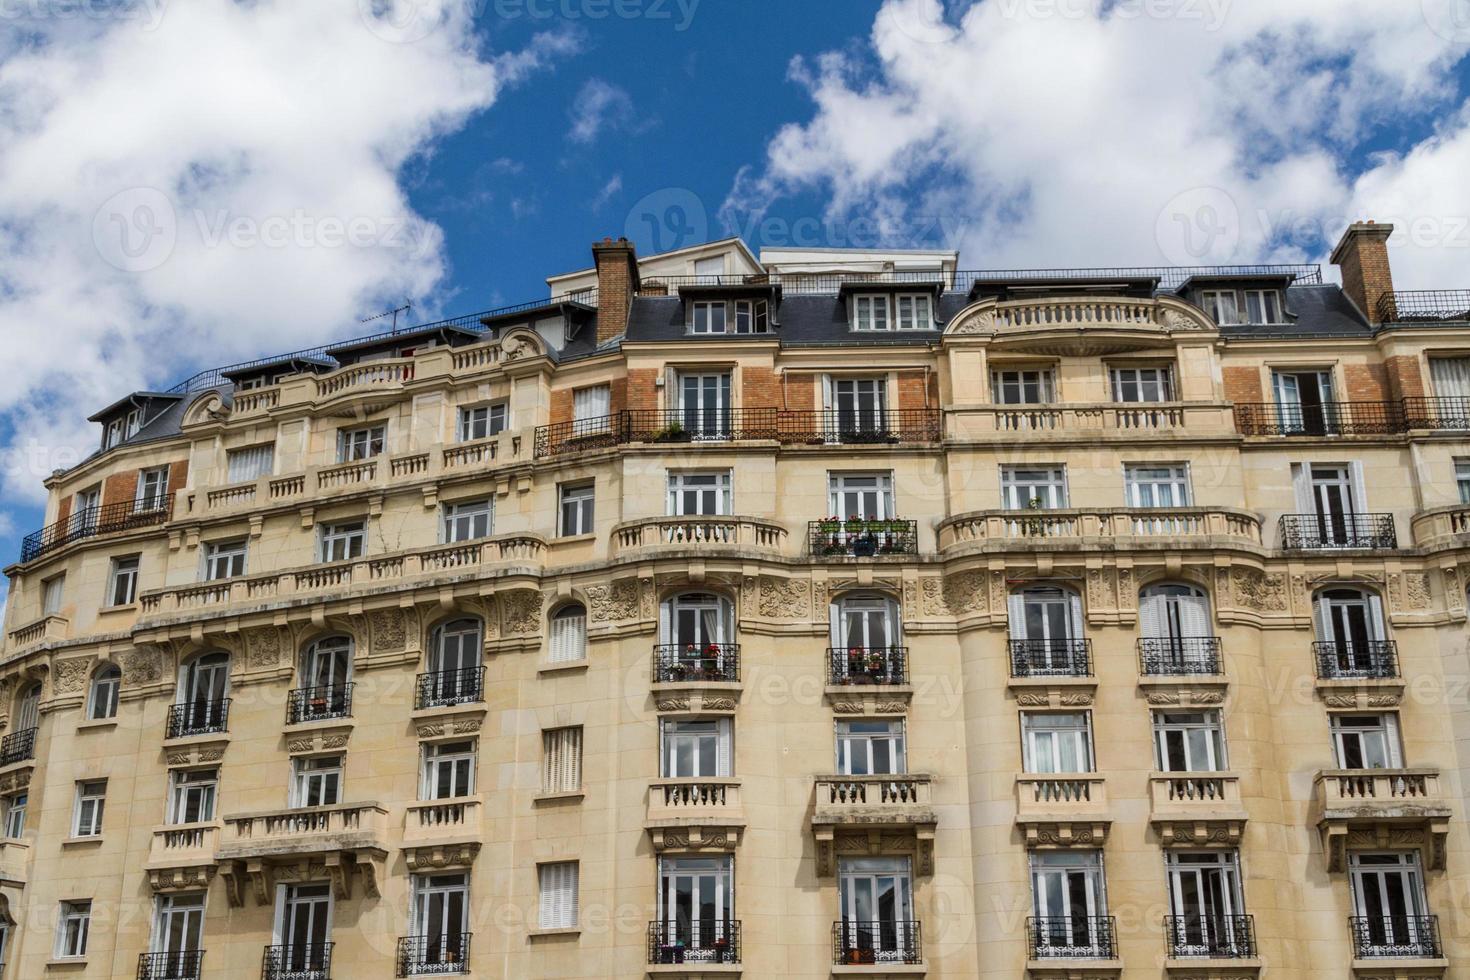 vackra parisiska gator visa paris, frankrike Europa foto